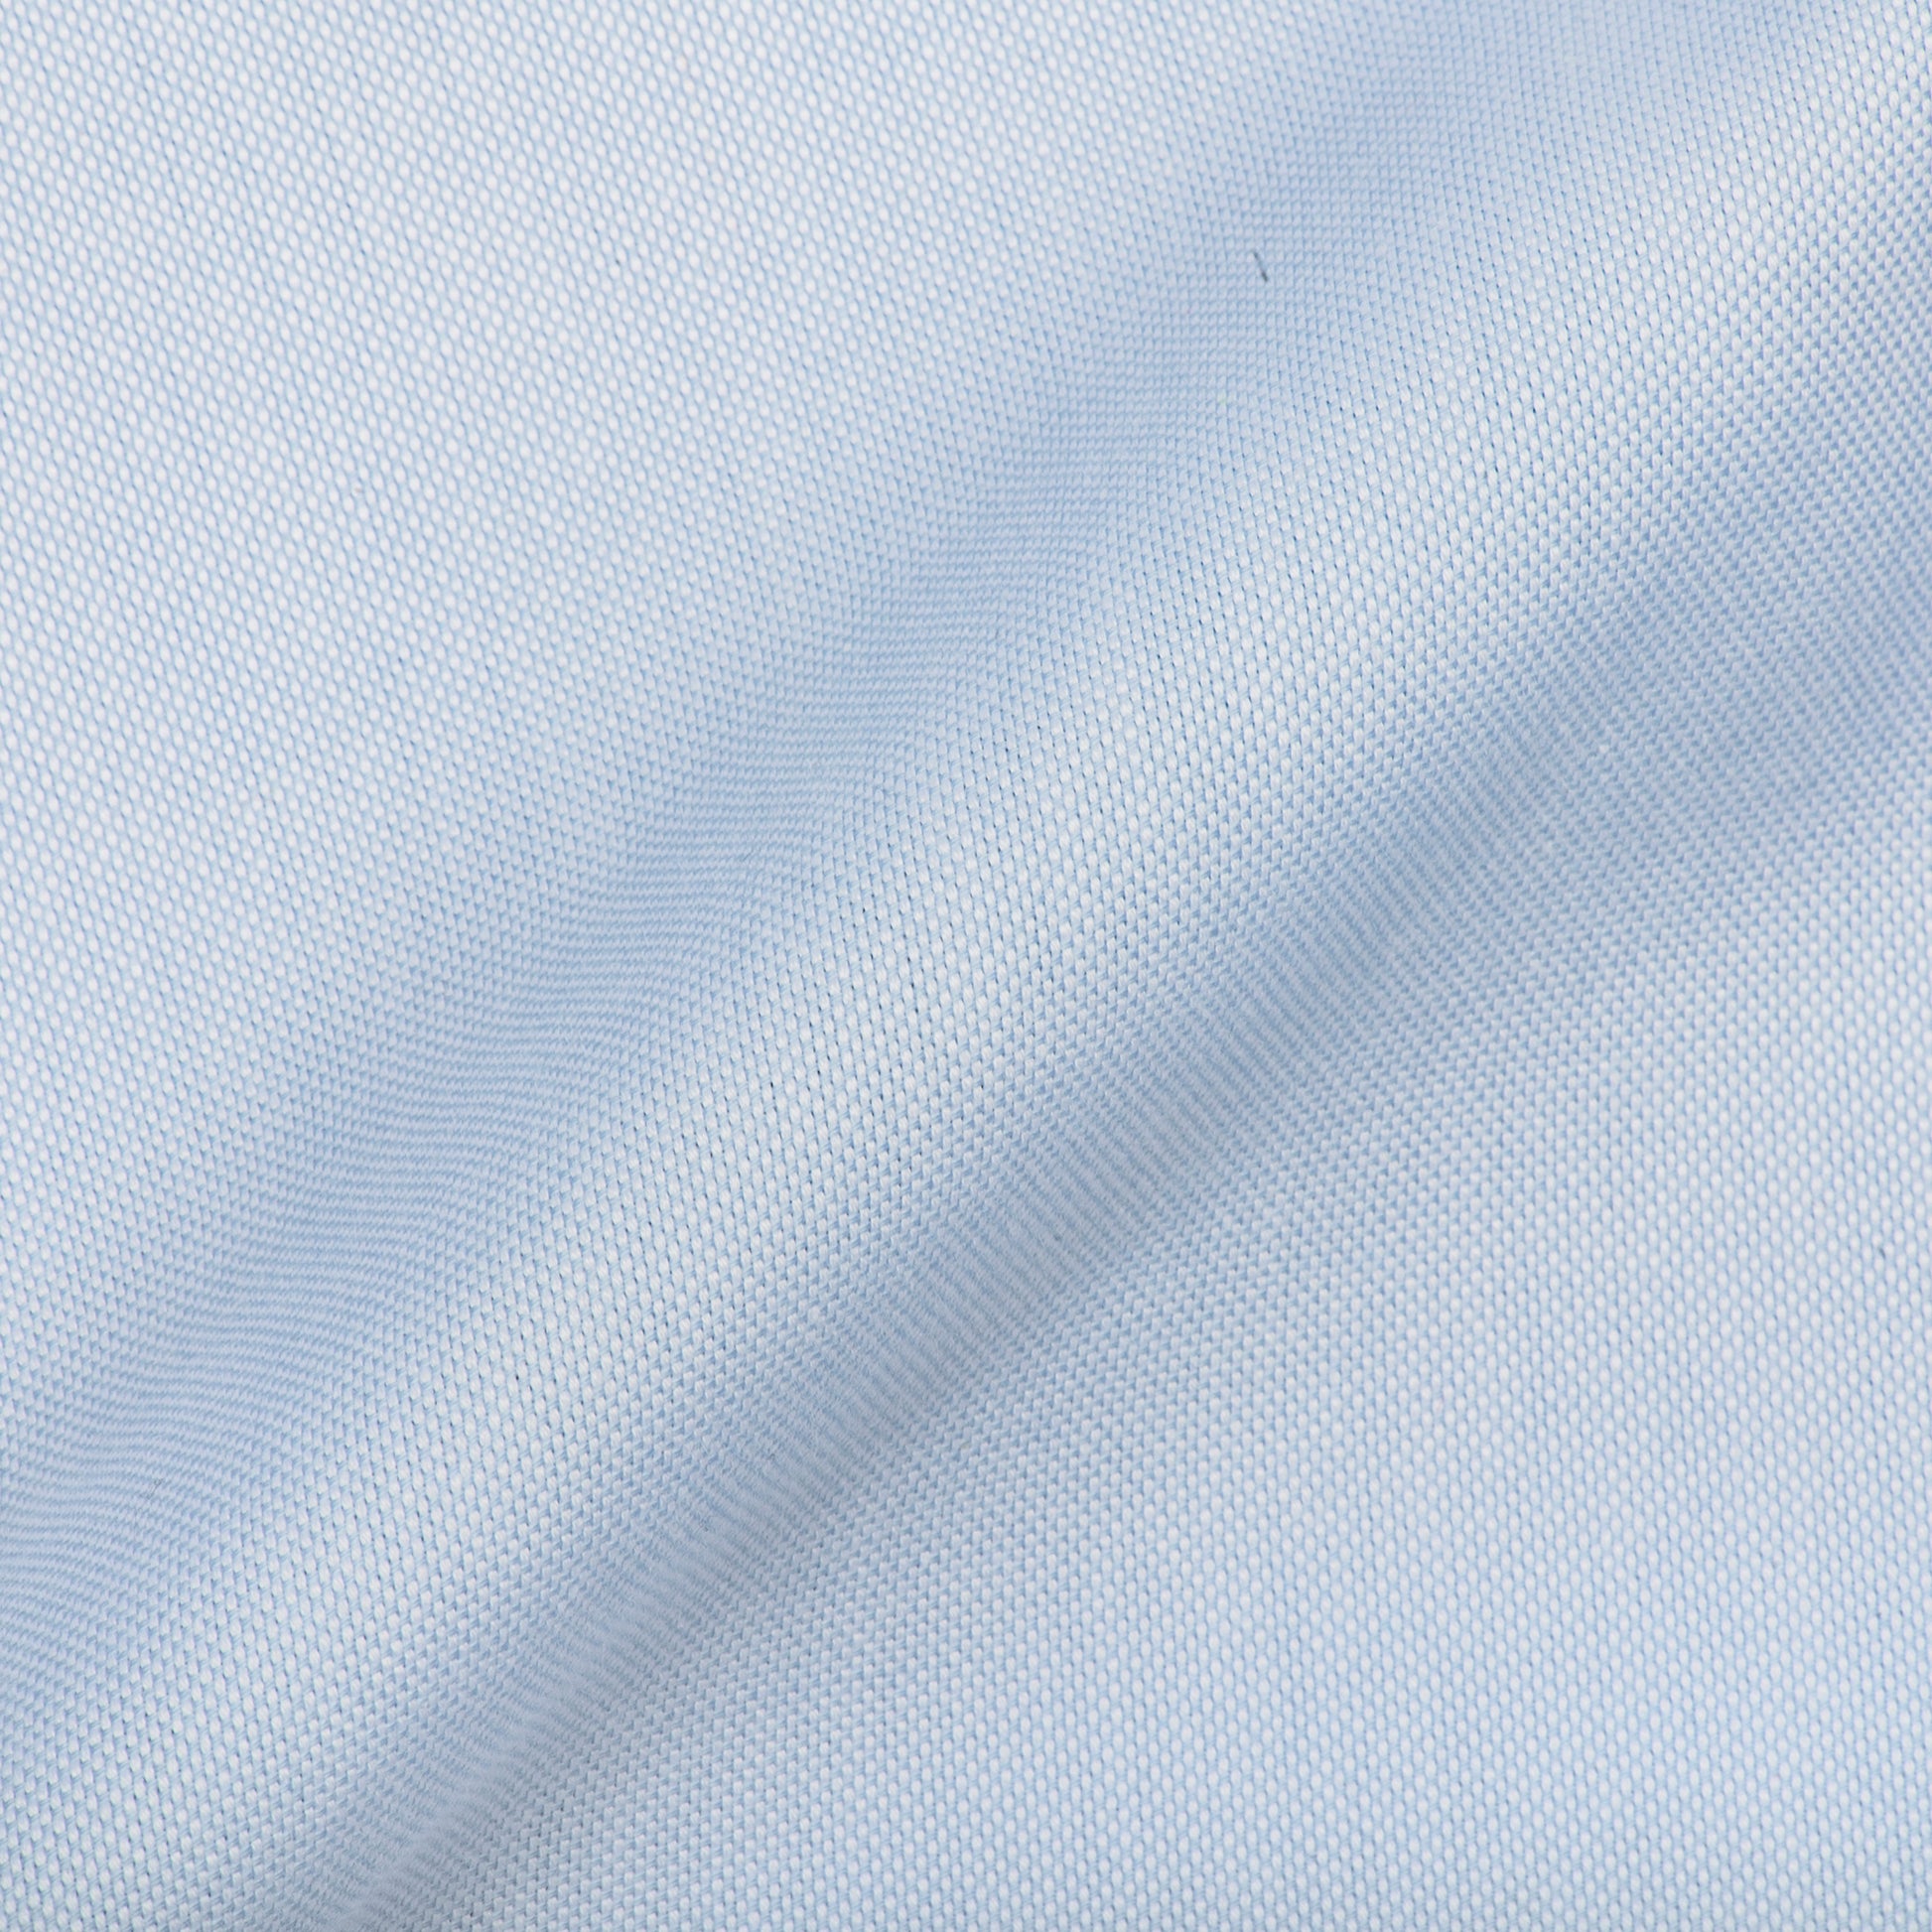 Light Blue Egyptian Cotton fabric